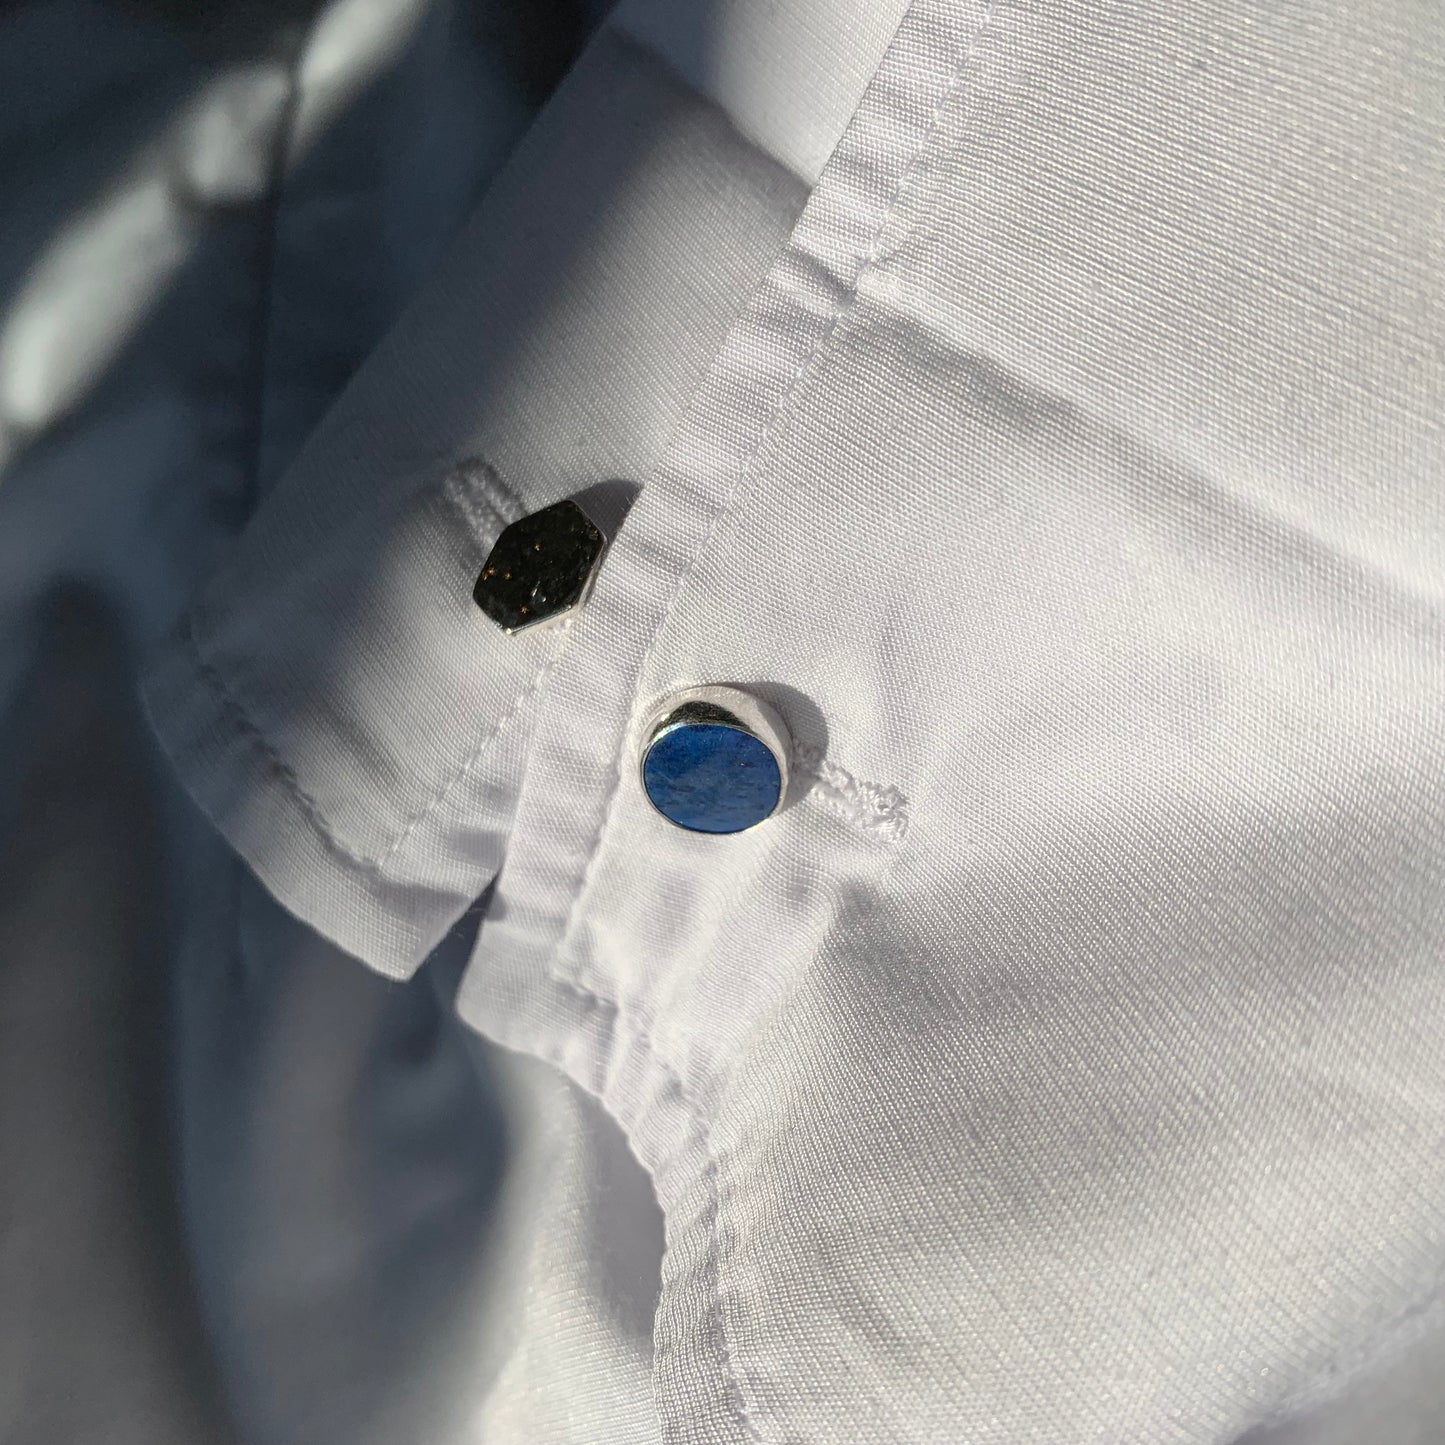 Lapis lazuli cufflinks in a white shirt